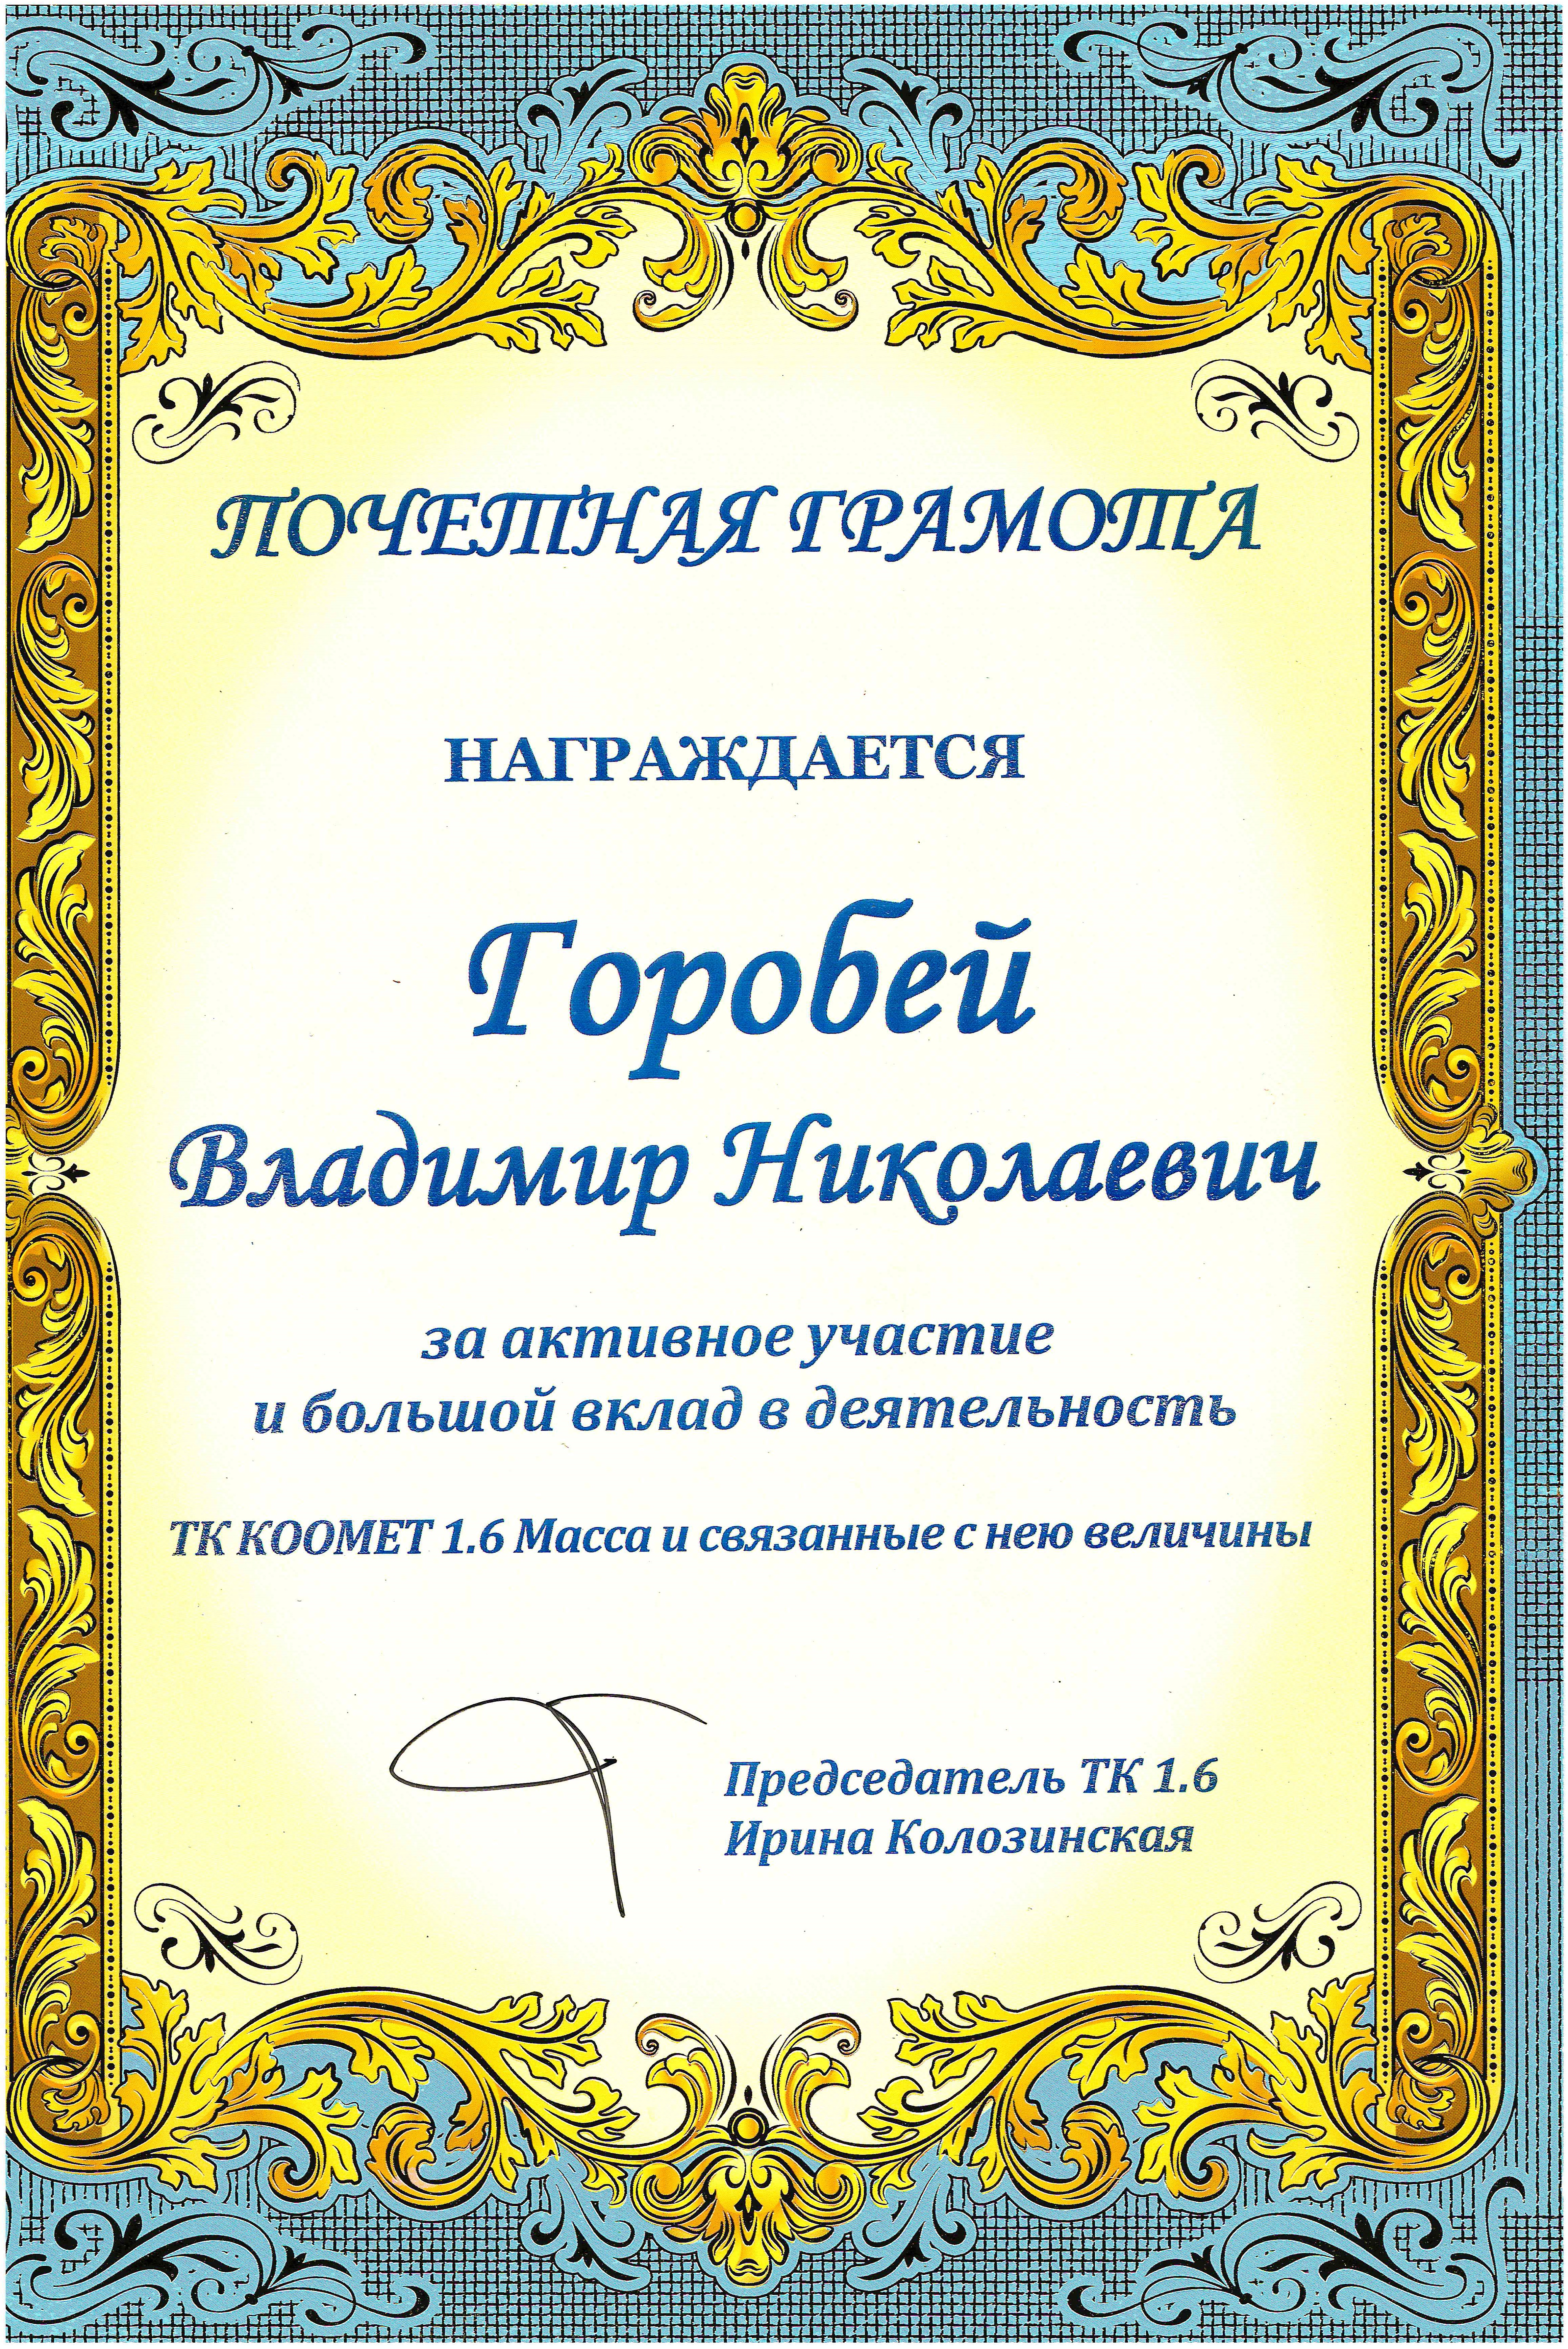 Почётная грамота - В. Н. Горобей